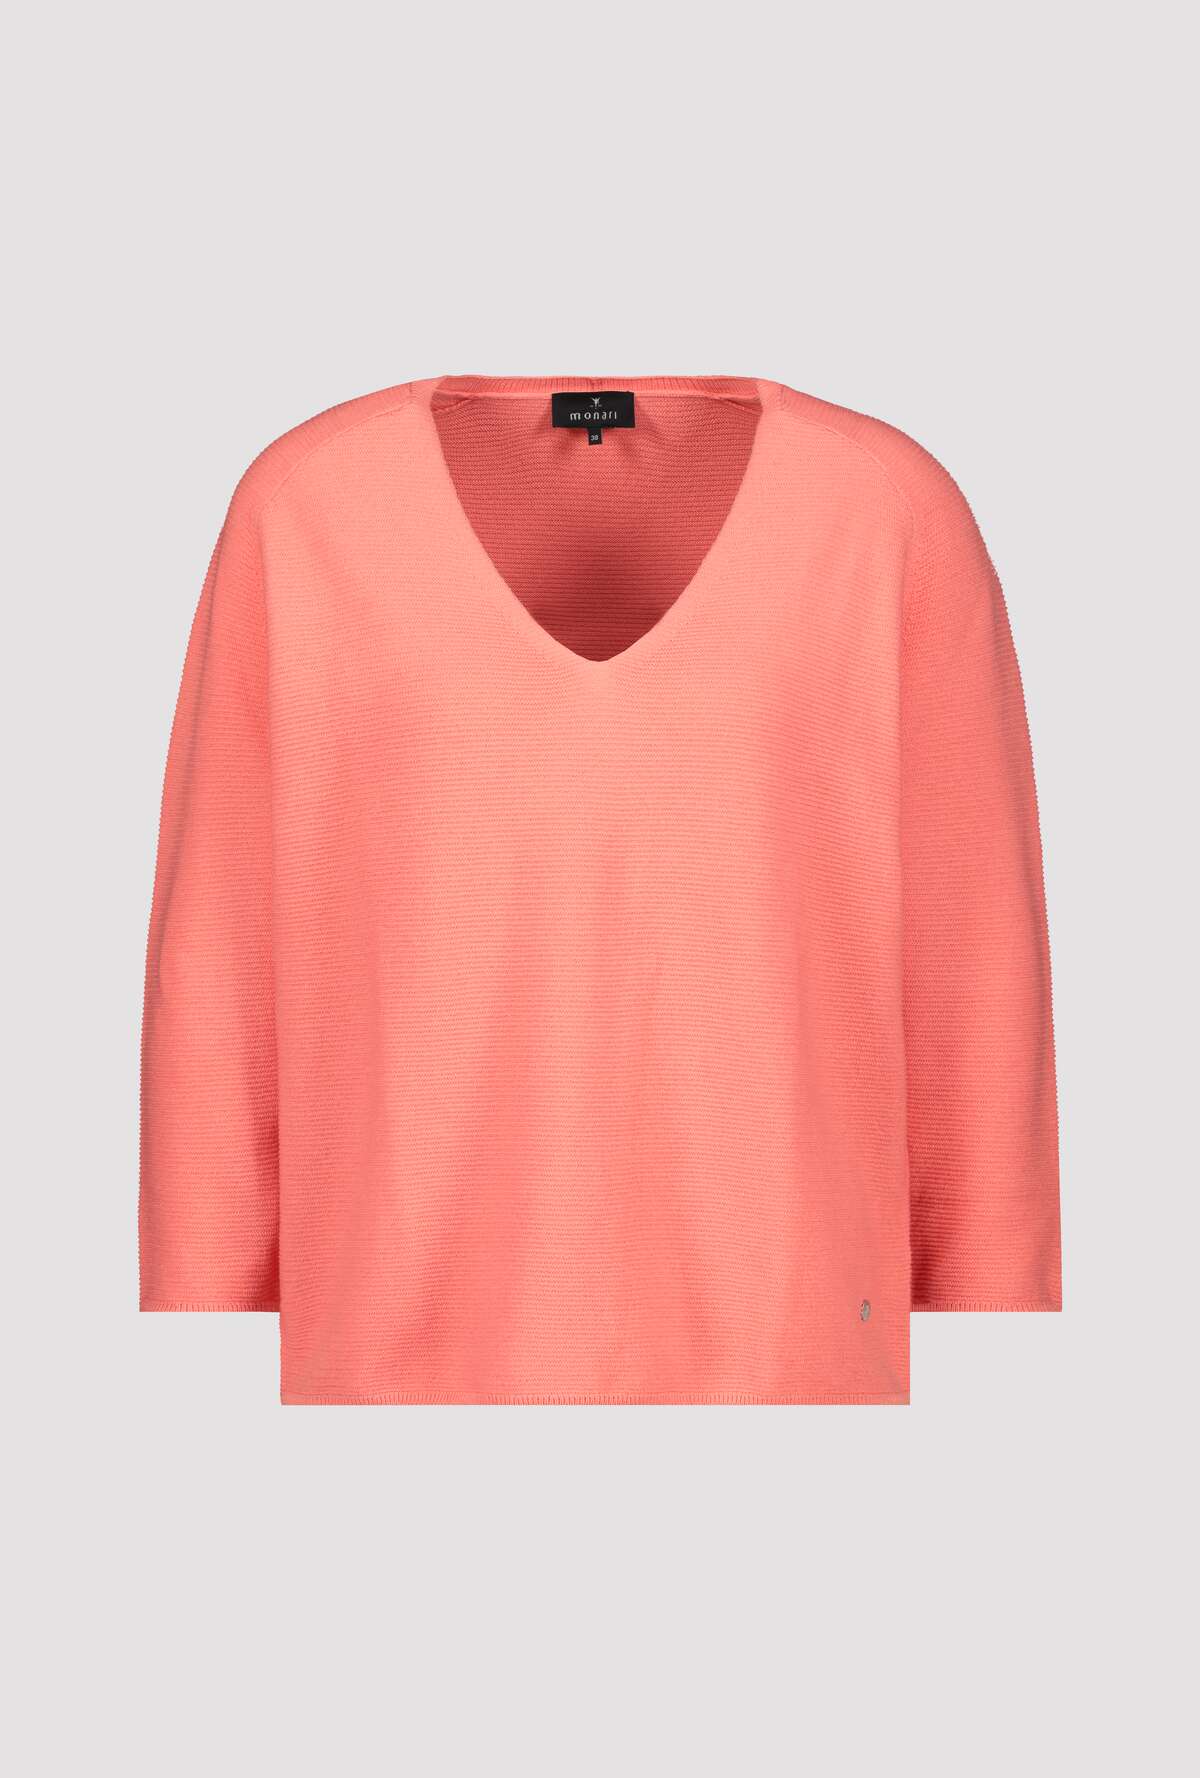 Monari - Knit Sweater